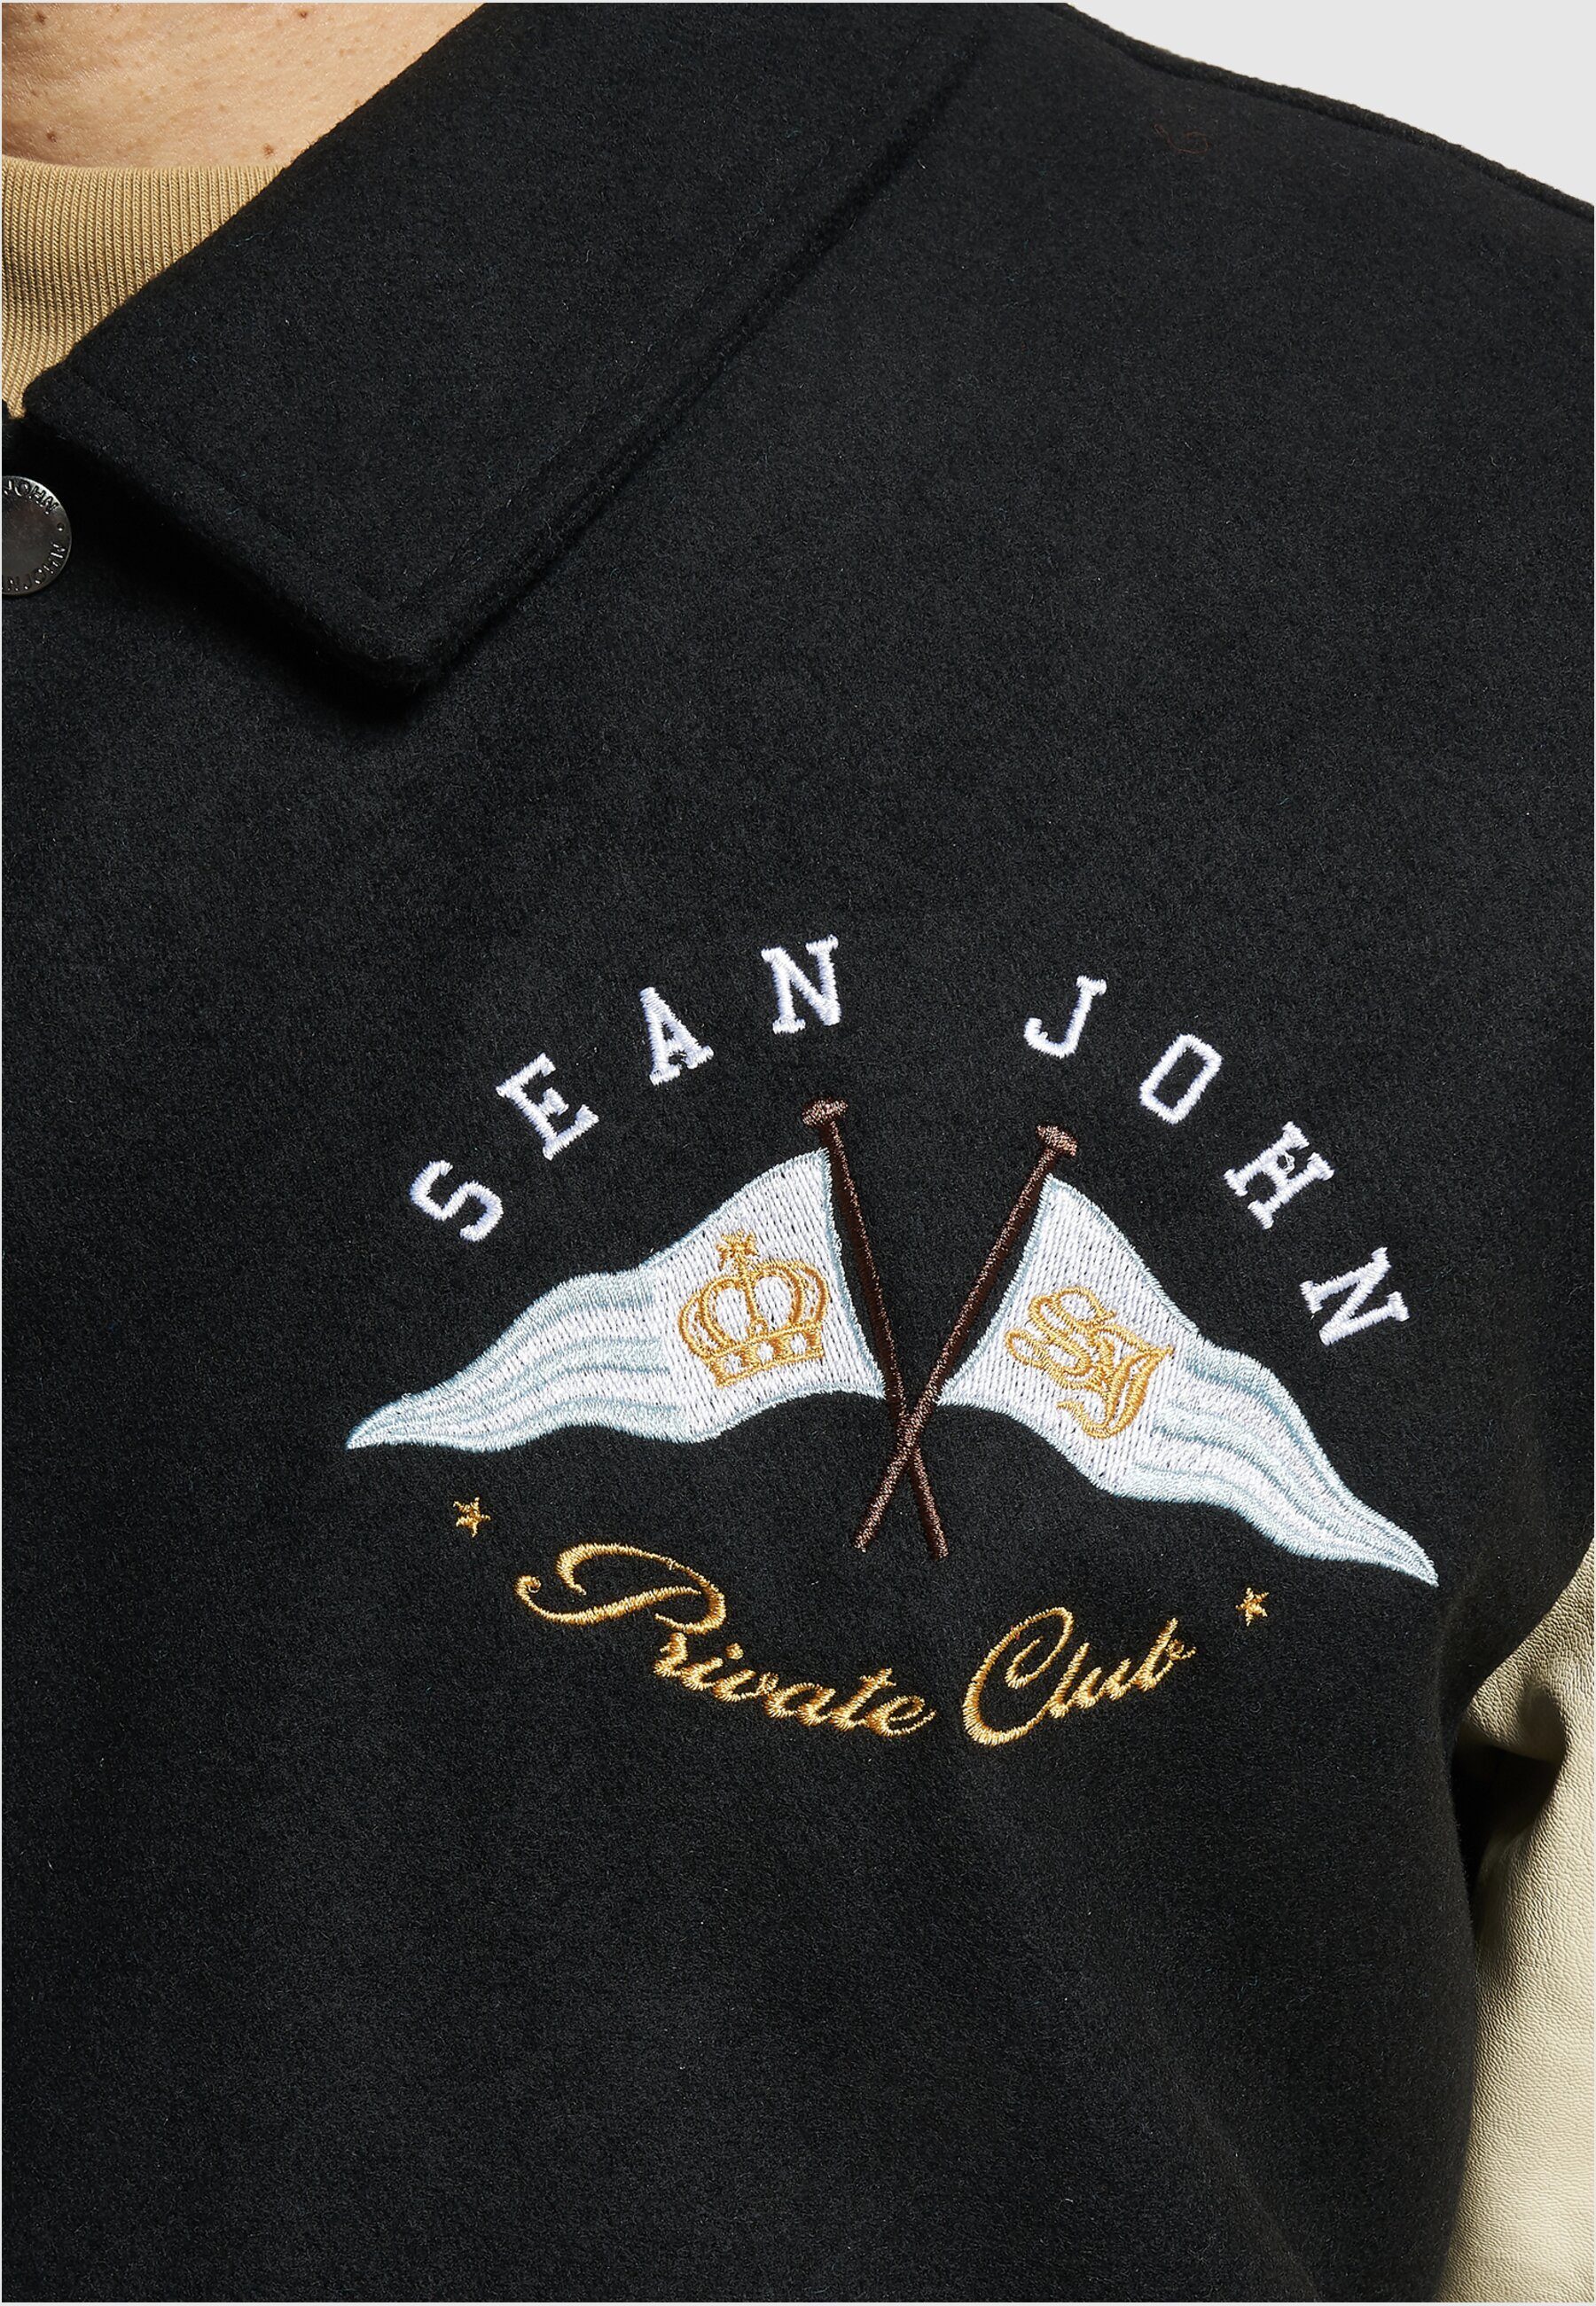 Sean John Outdoorjacke Herren JM232-016-02 Yacht Collegejacket (1-St) SJ Club